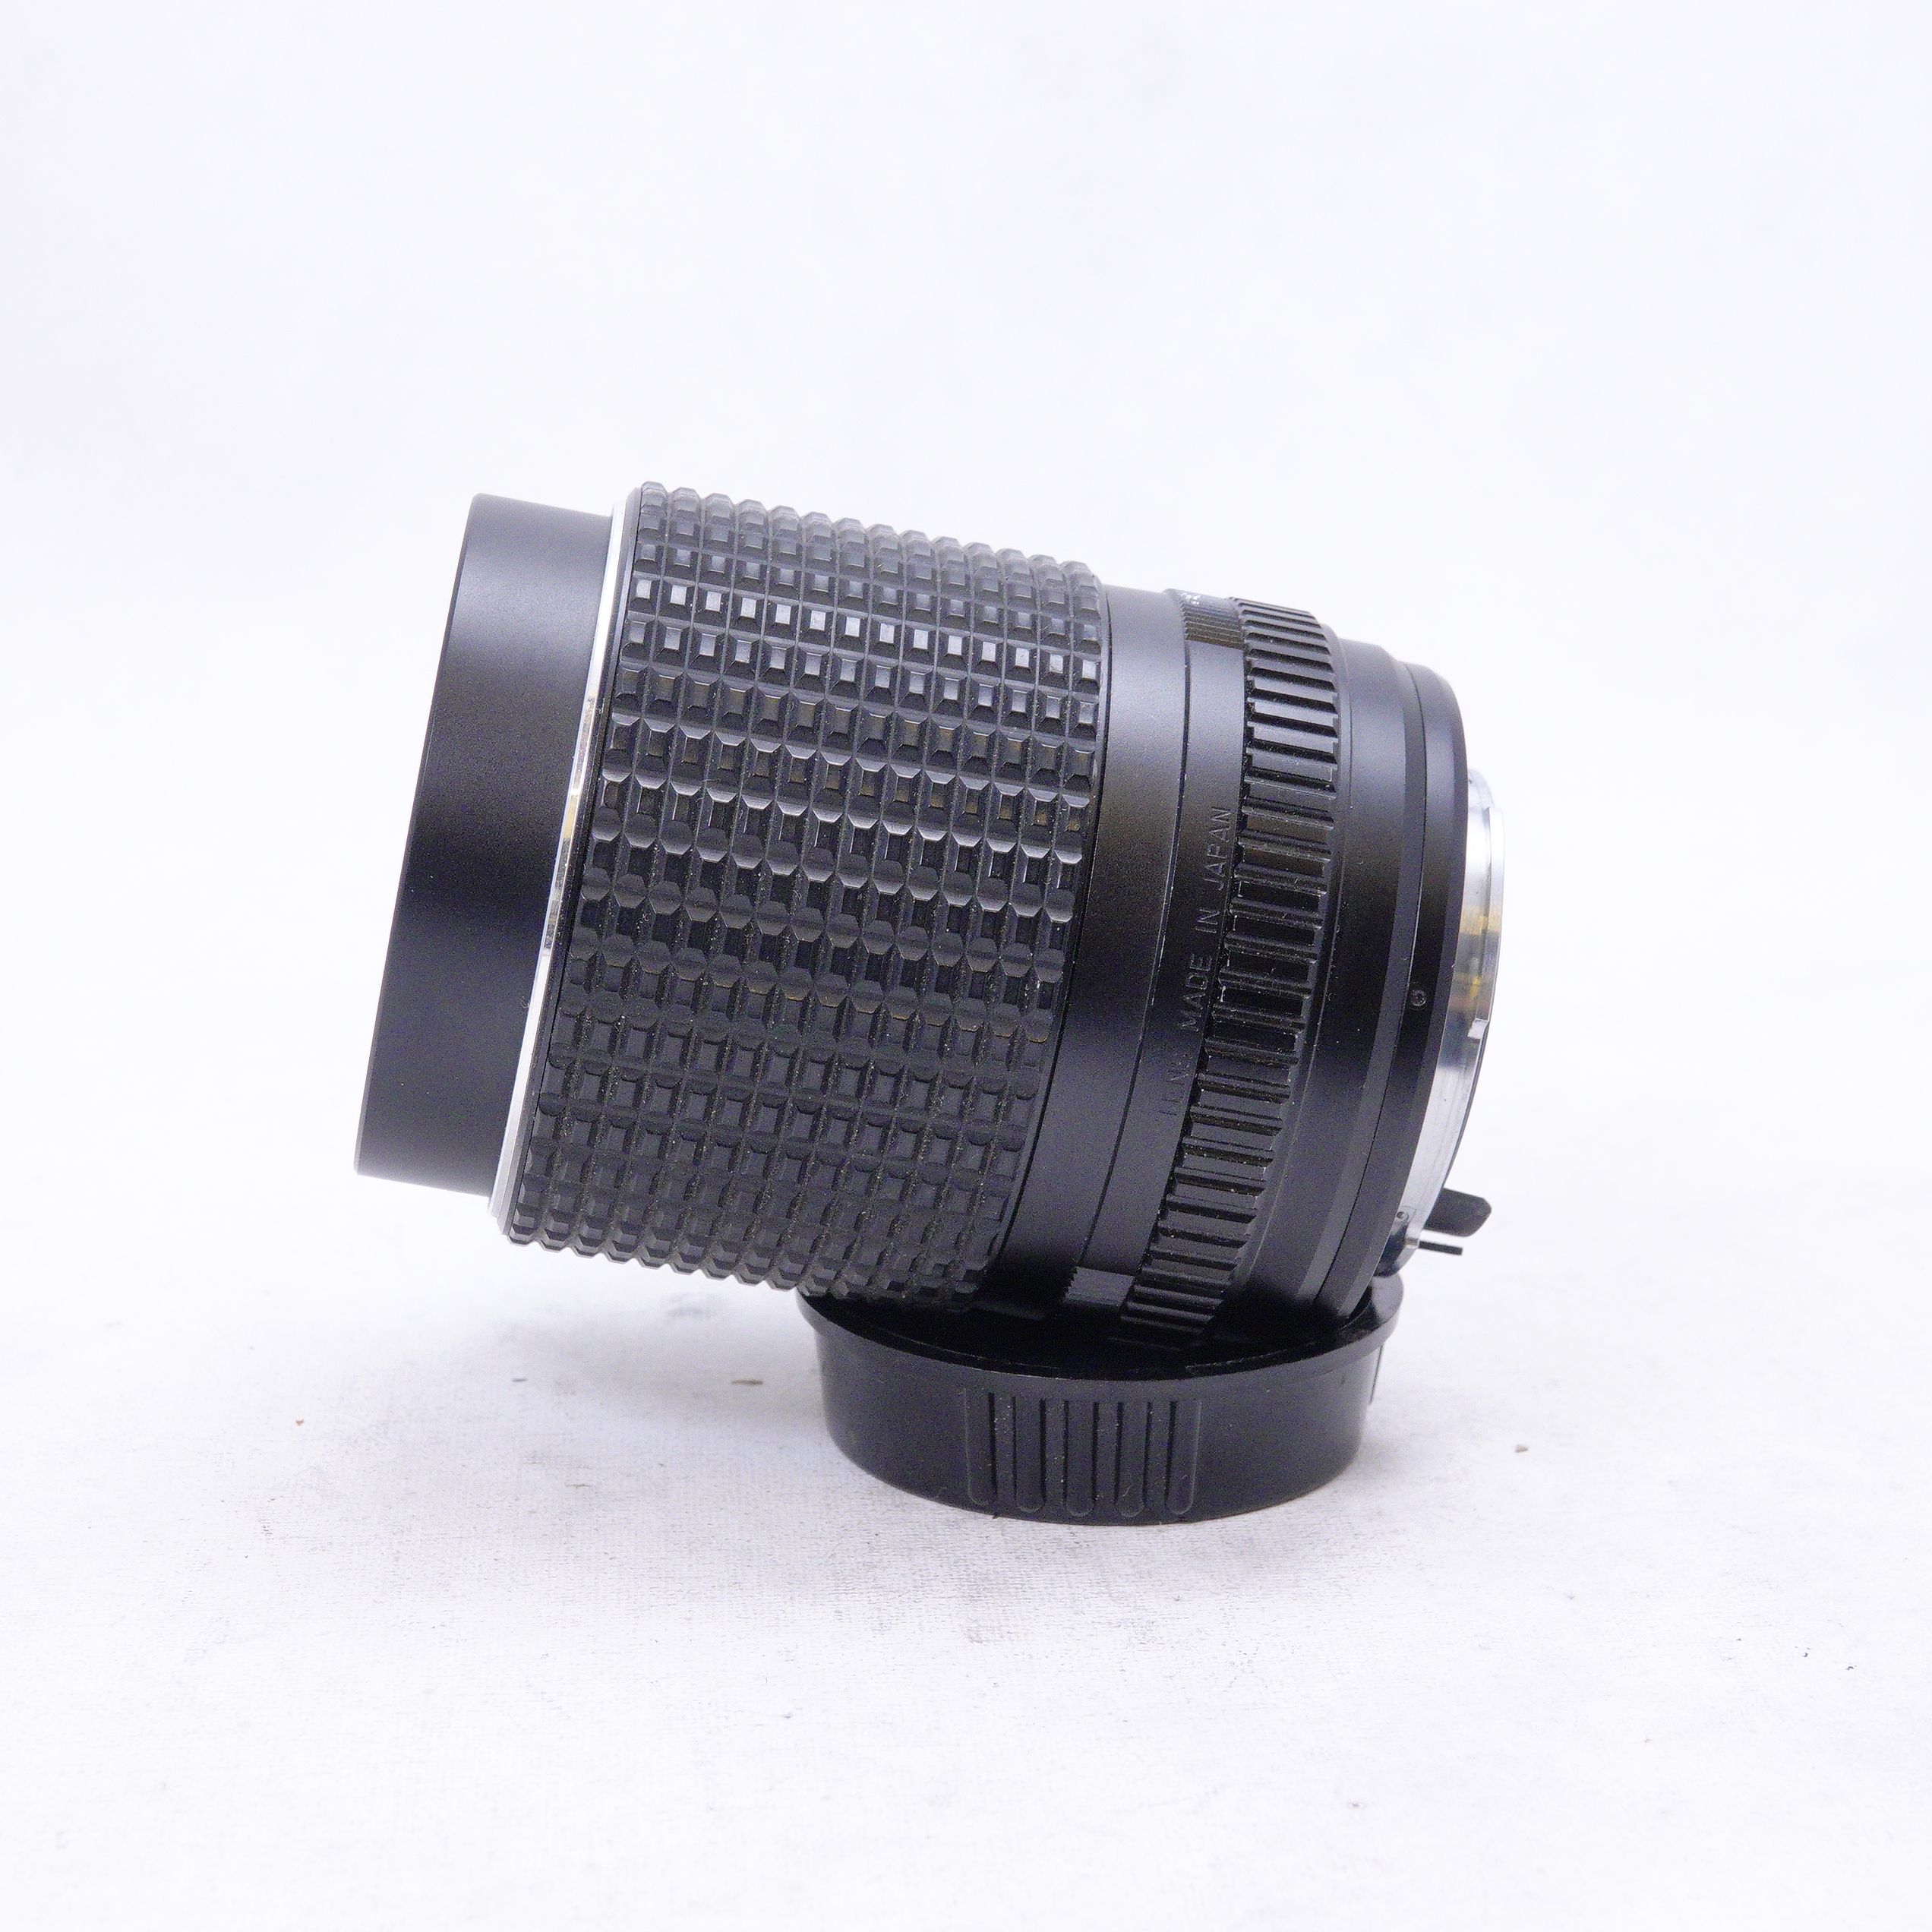 SMC Pentax 135mm f2.5 (Montura Pentax K) - Usado